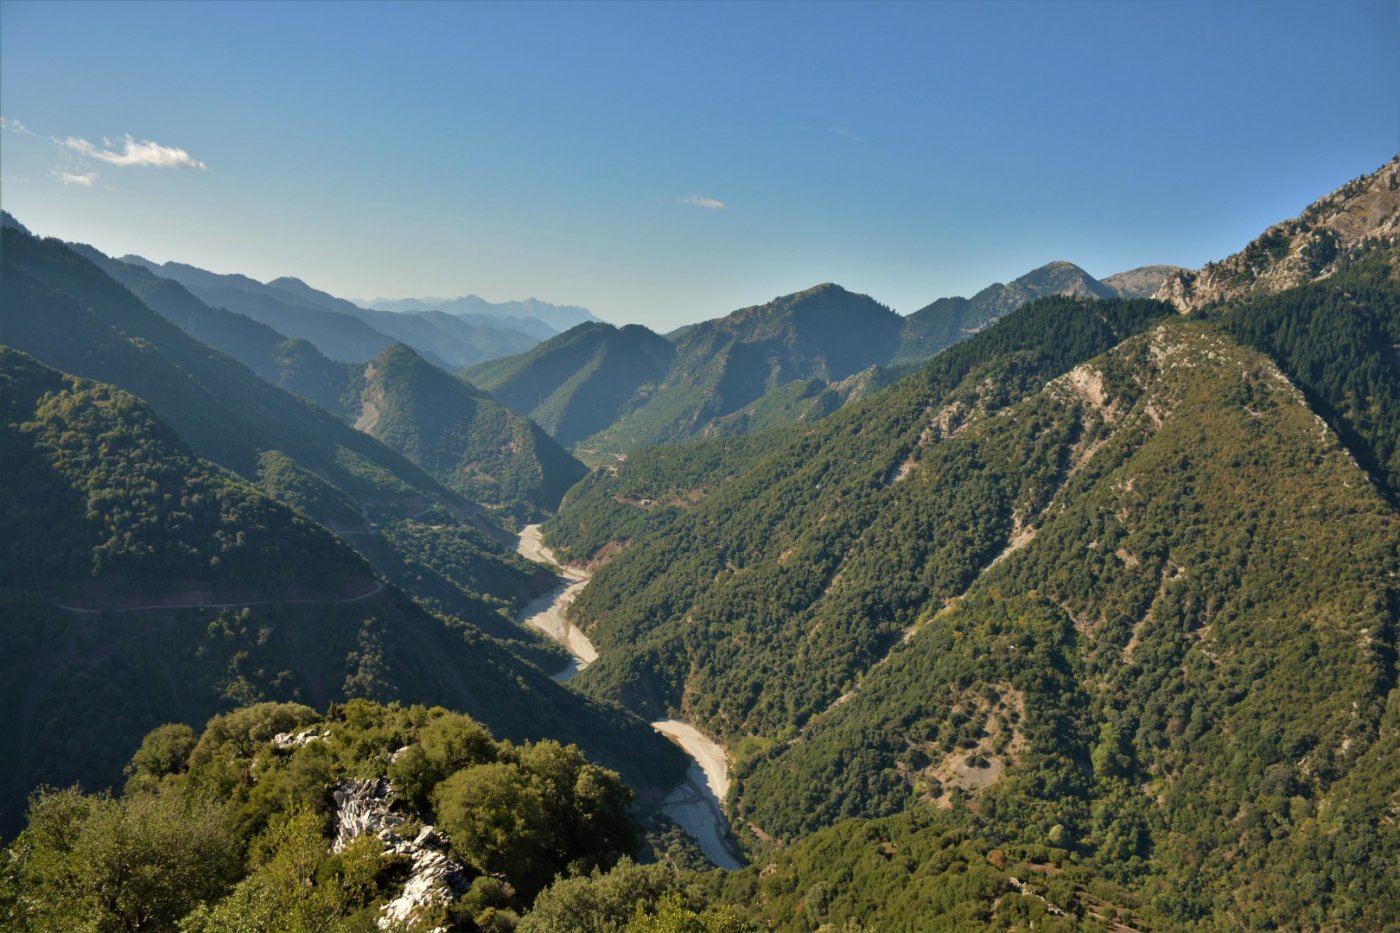 Western Agrafa, / Agrafiotis river (Karvasaras) - Epiniana - Asprorema 14km / Central Pindos